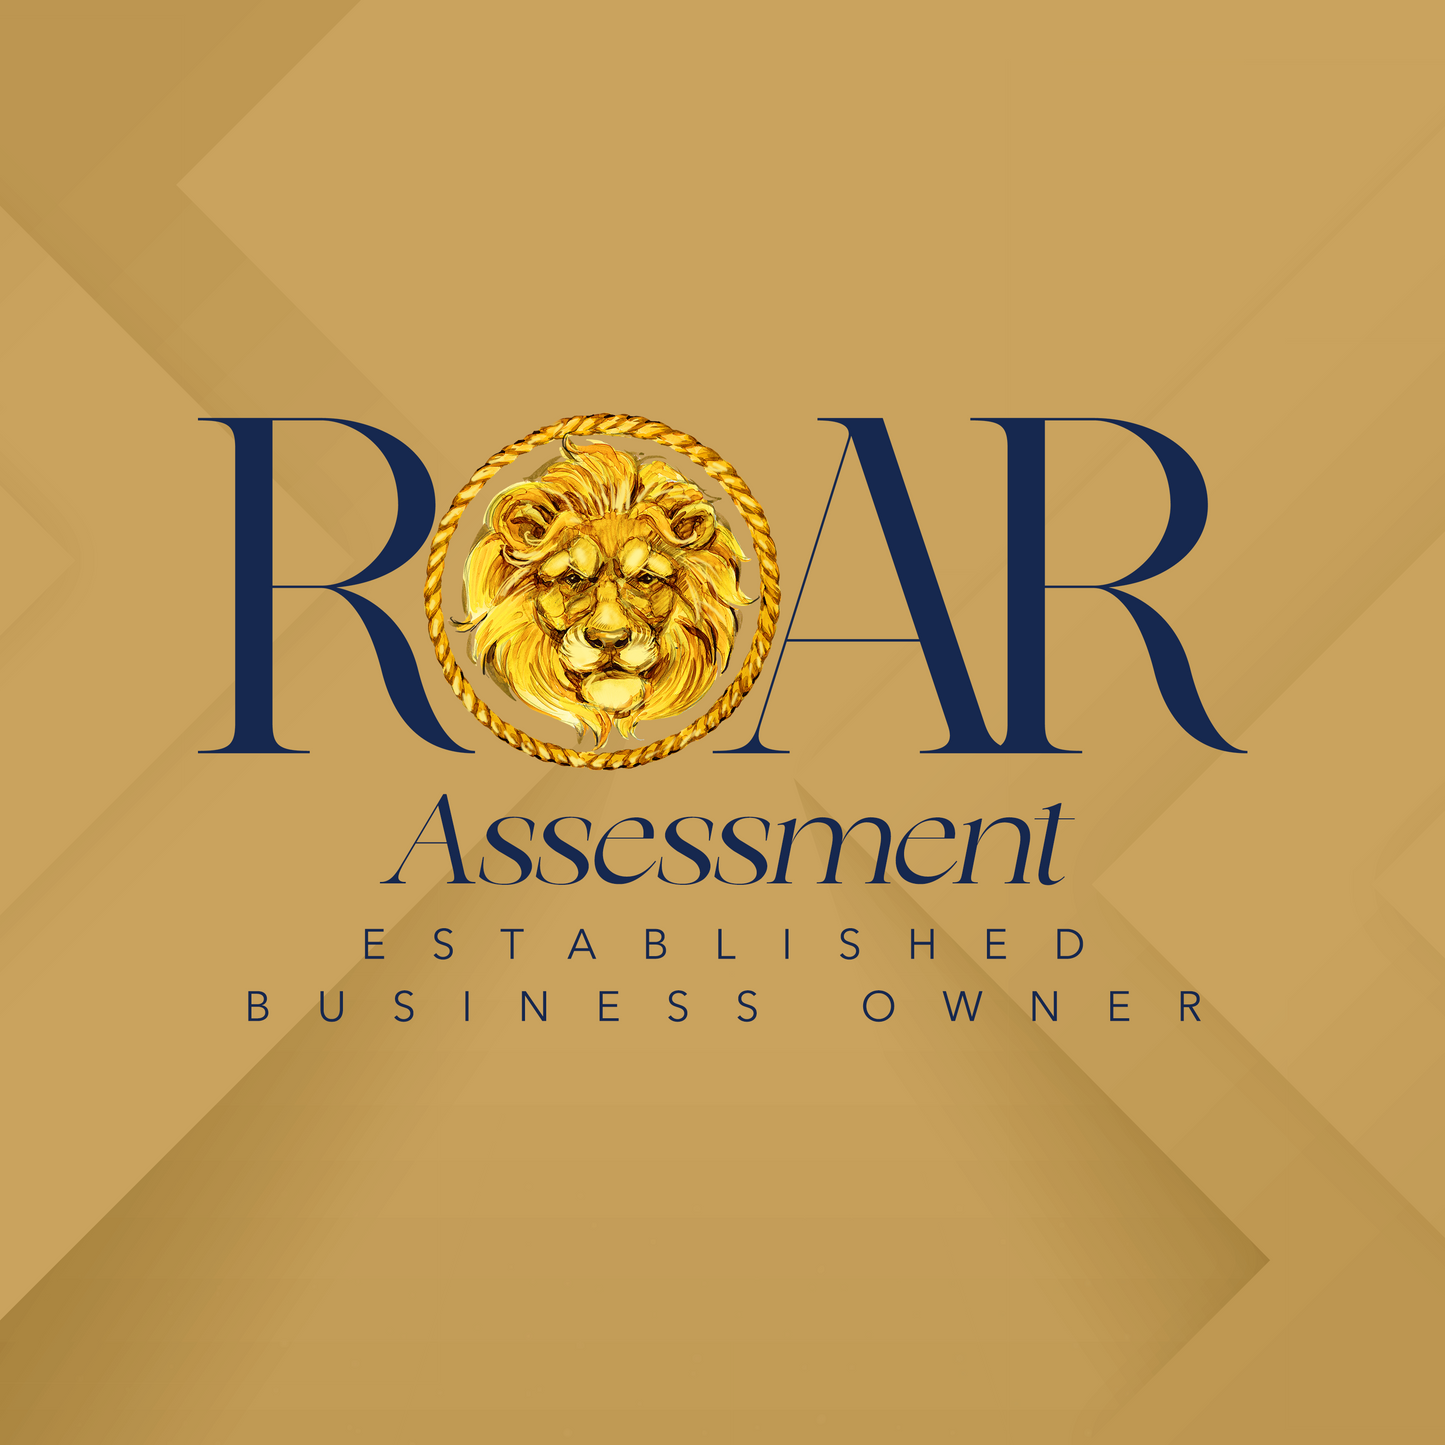 (Entrepreneur) ROAR Established Business Owner Assessment